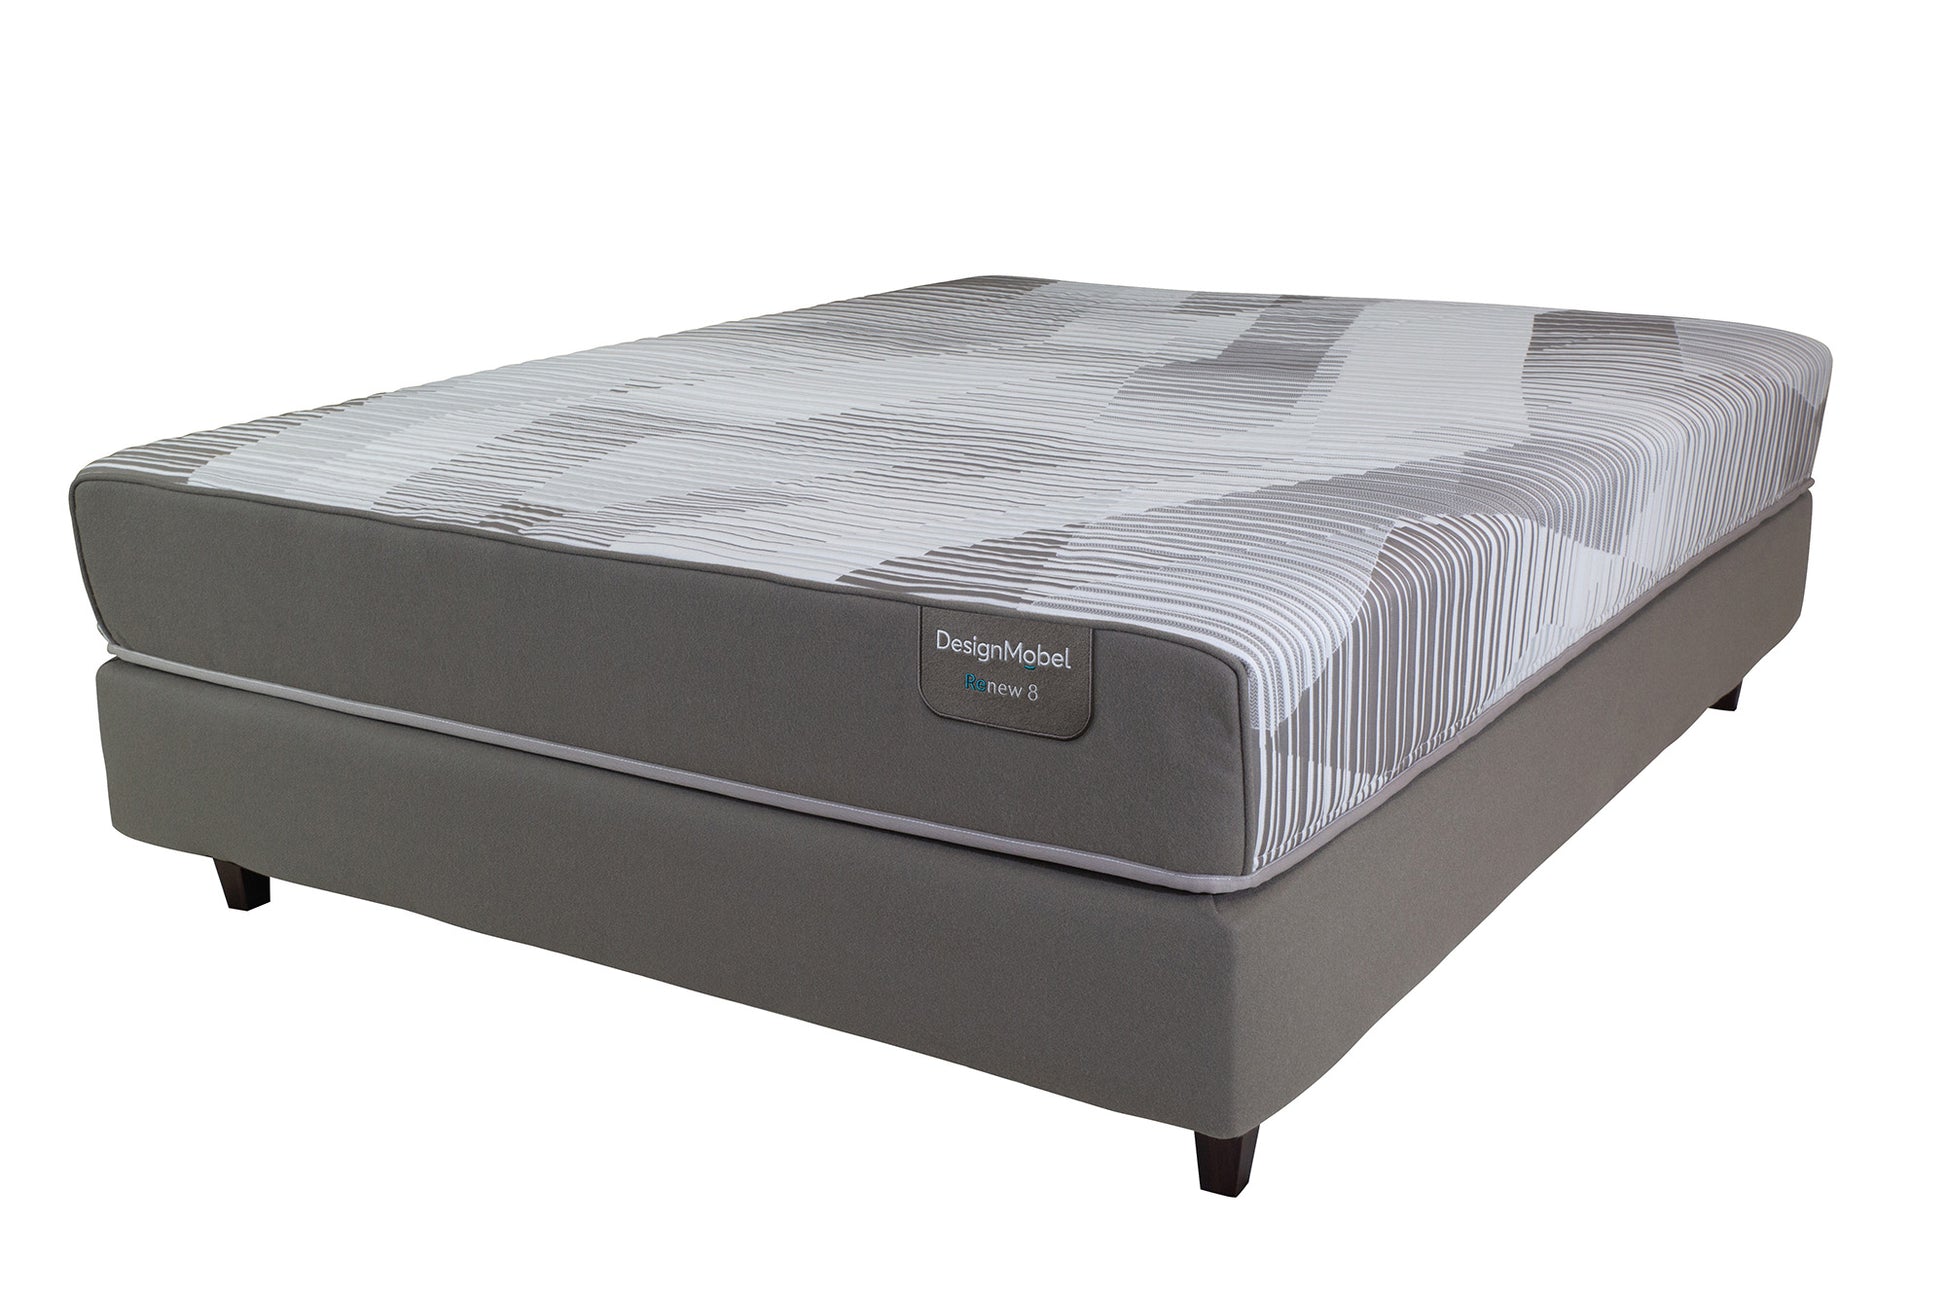 renew8-long-single-mattress-2